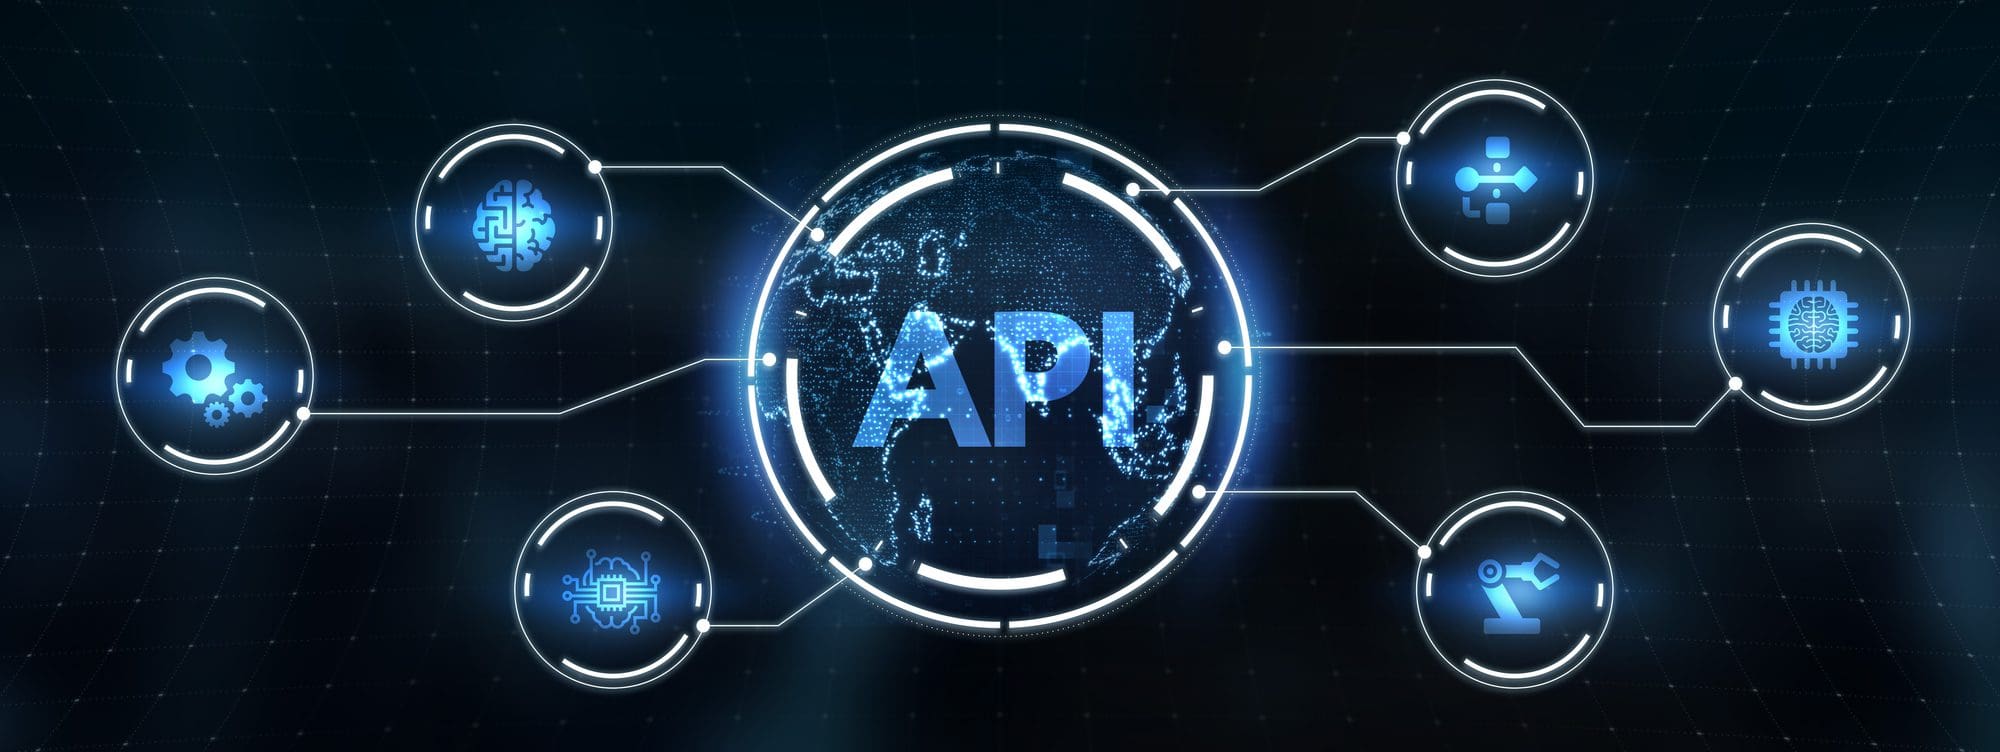 API – SYSTEMS INTEGRATION - Safe2Drive